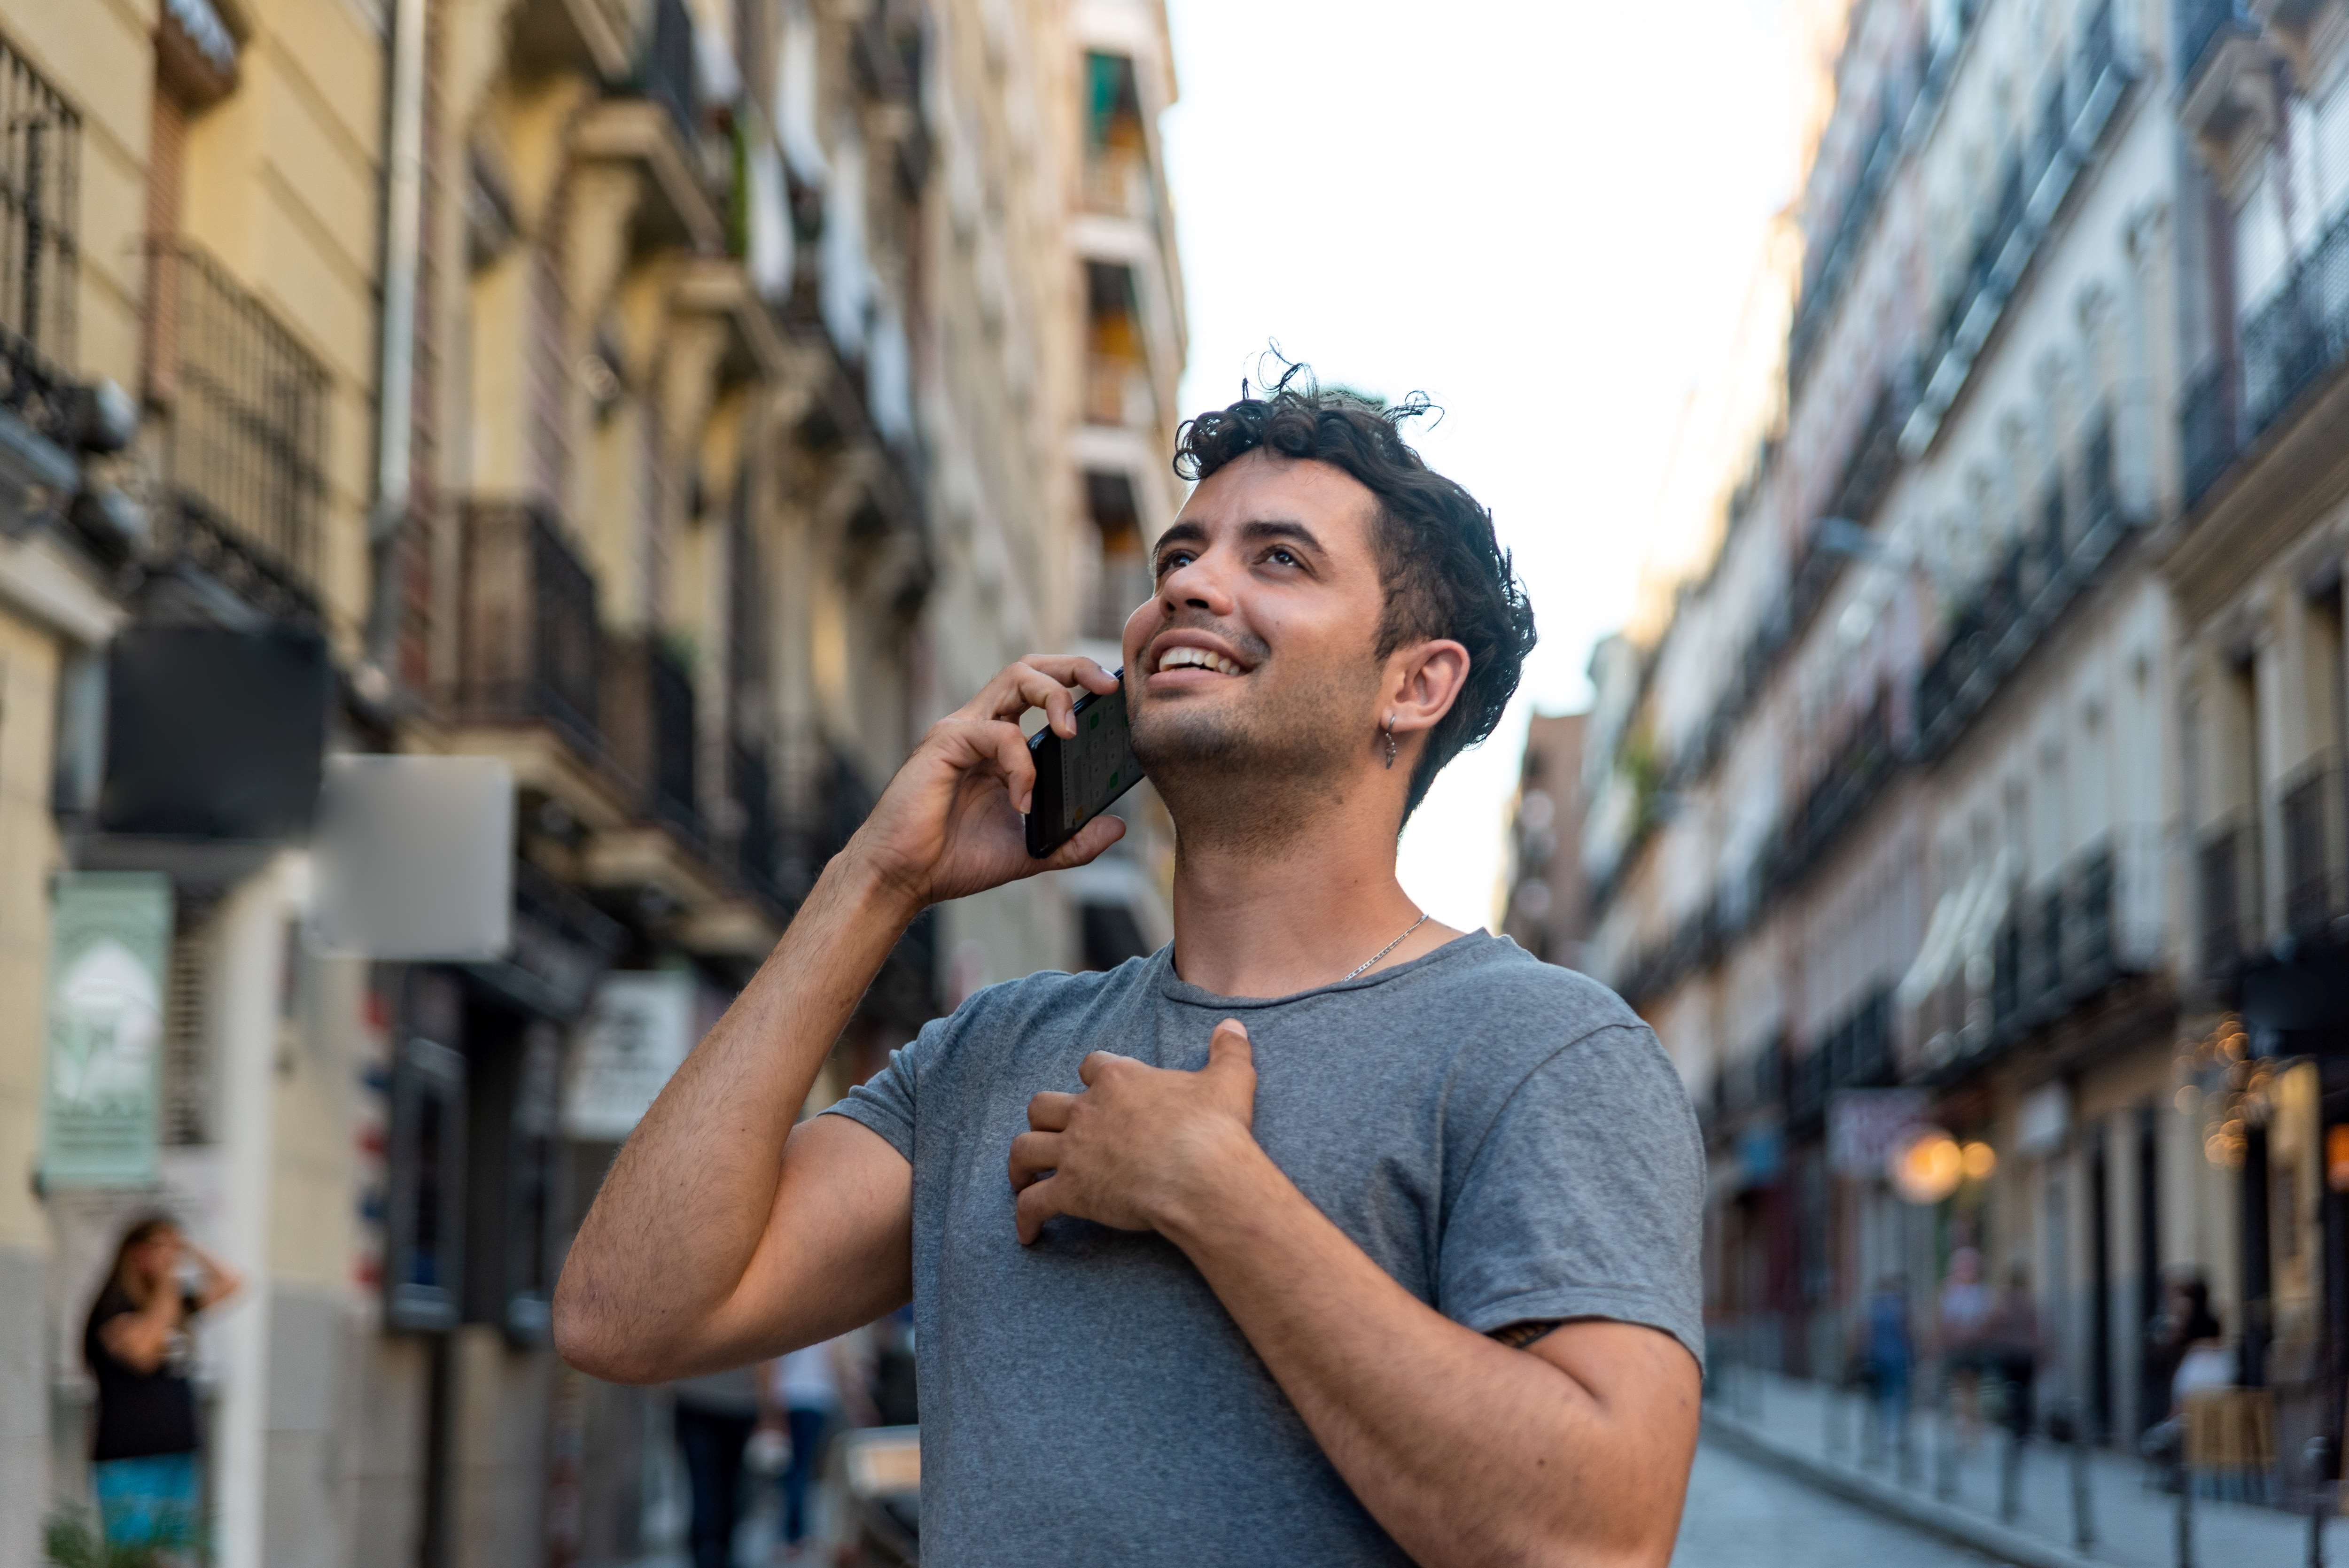 man on phone on street in city